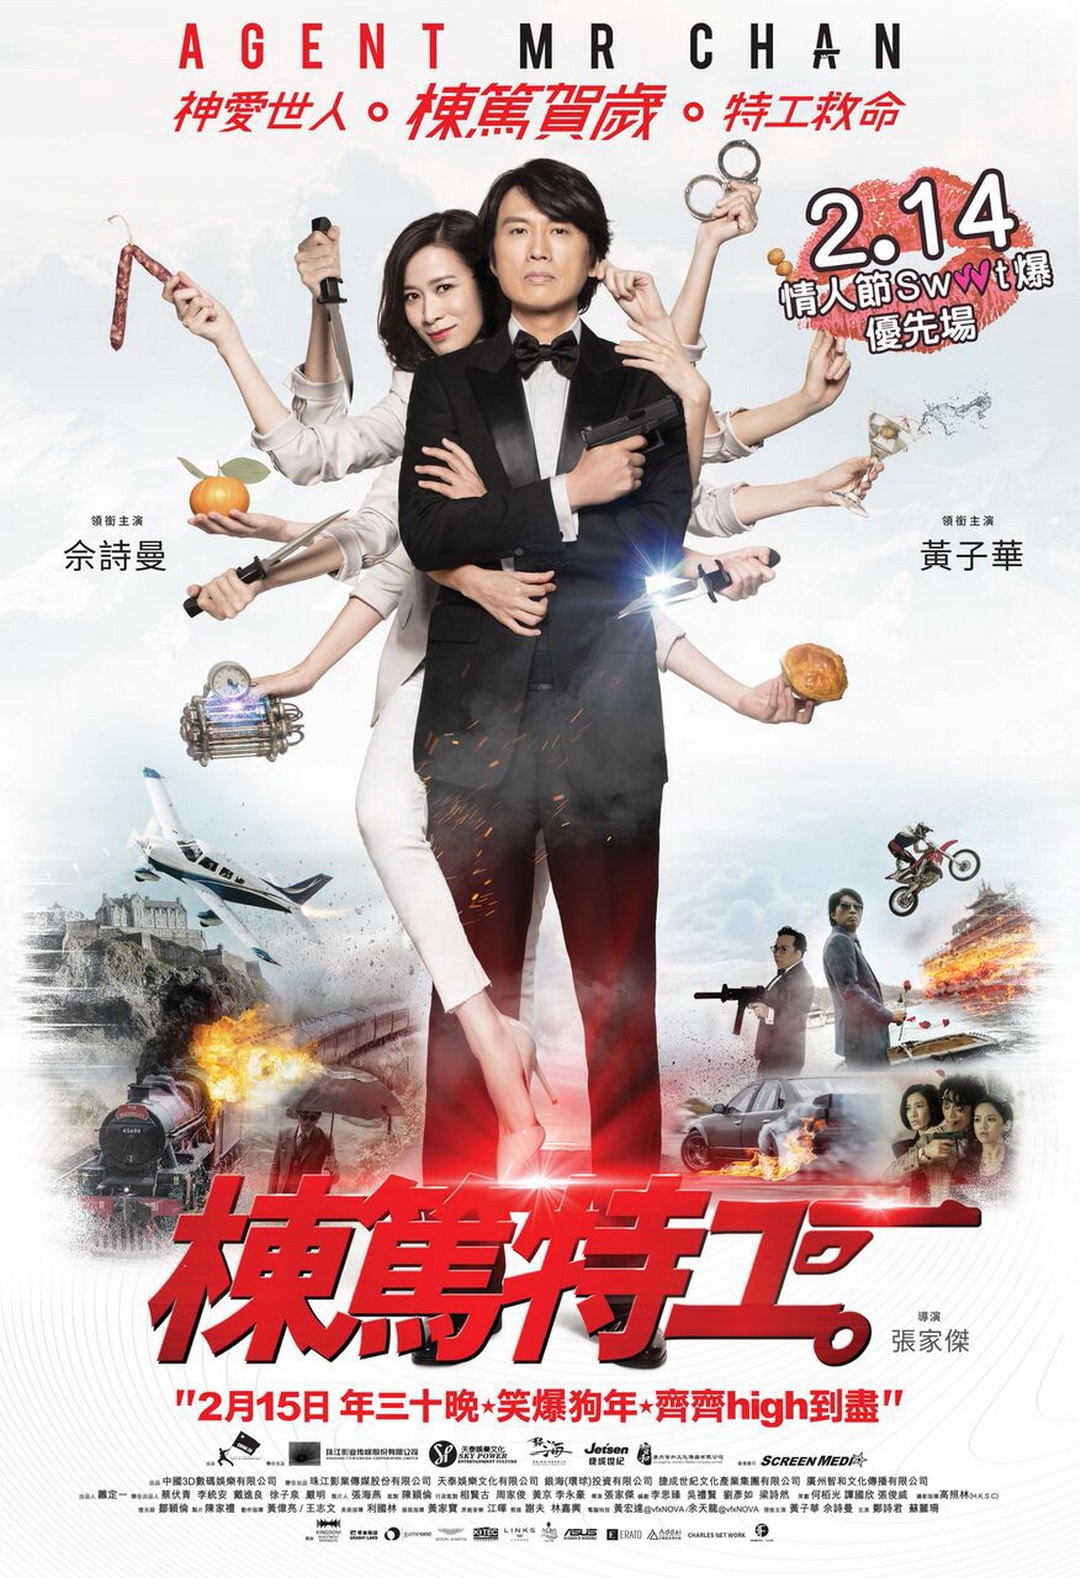 HK TV Drama, Watch HK Movie Online, Agent Mr Chan